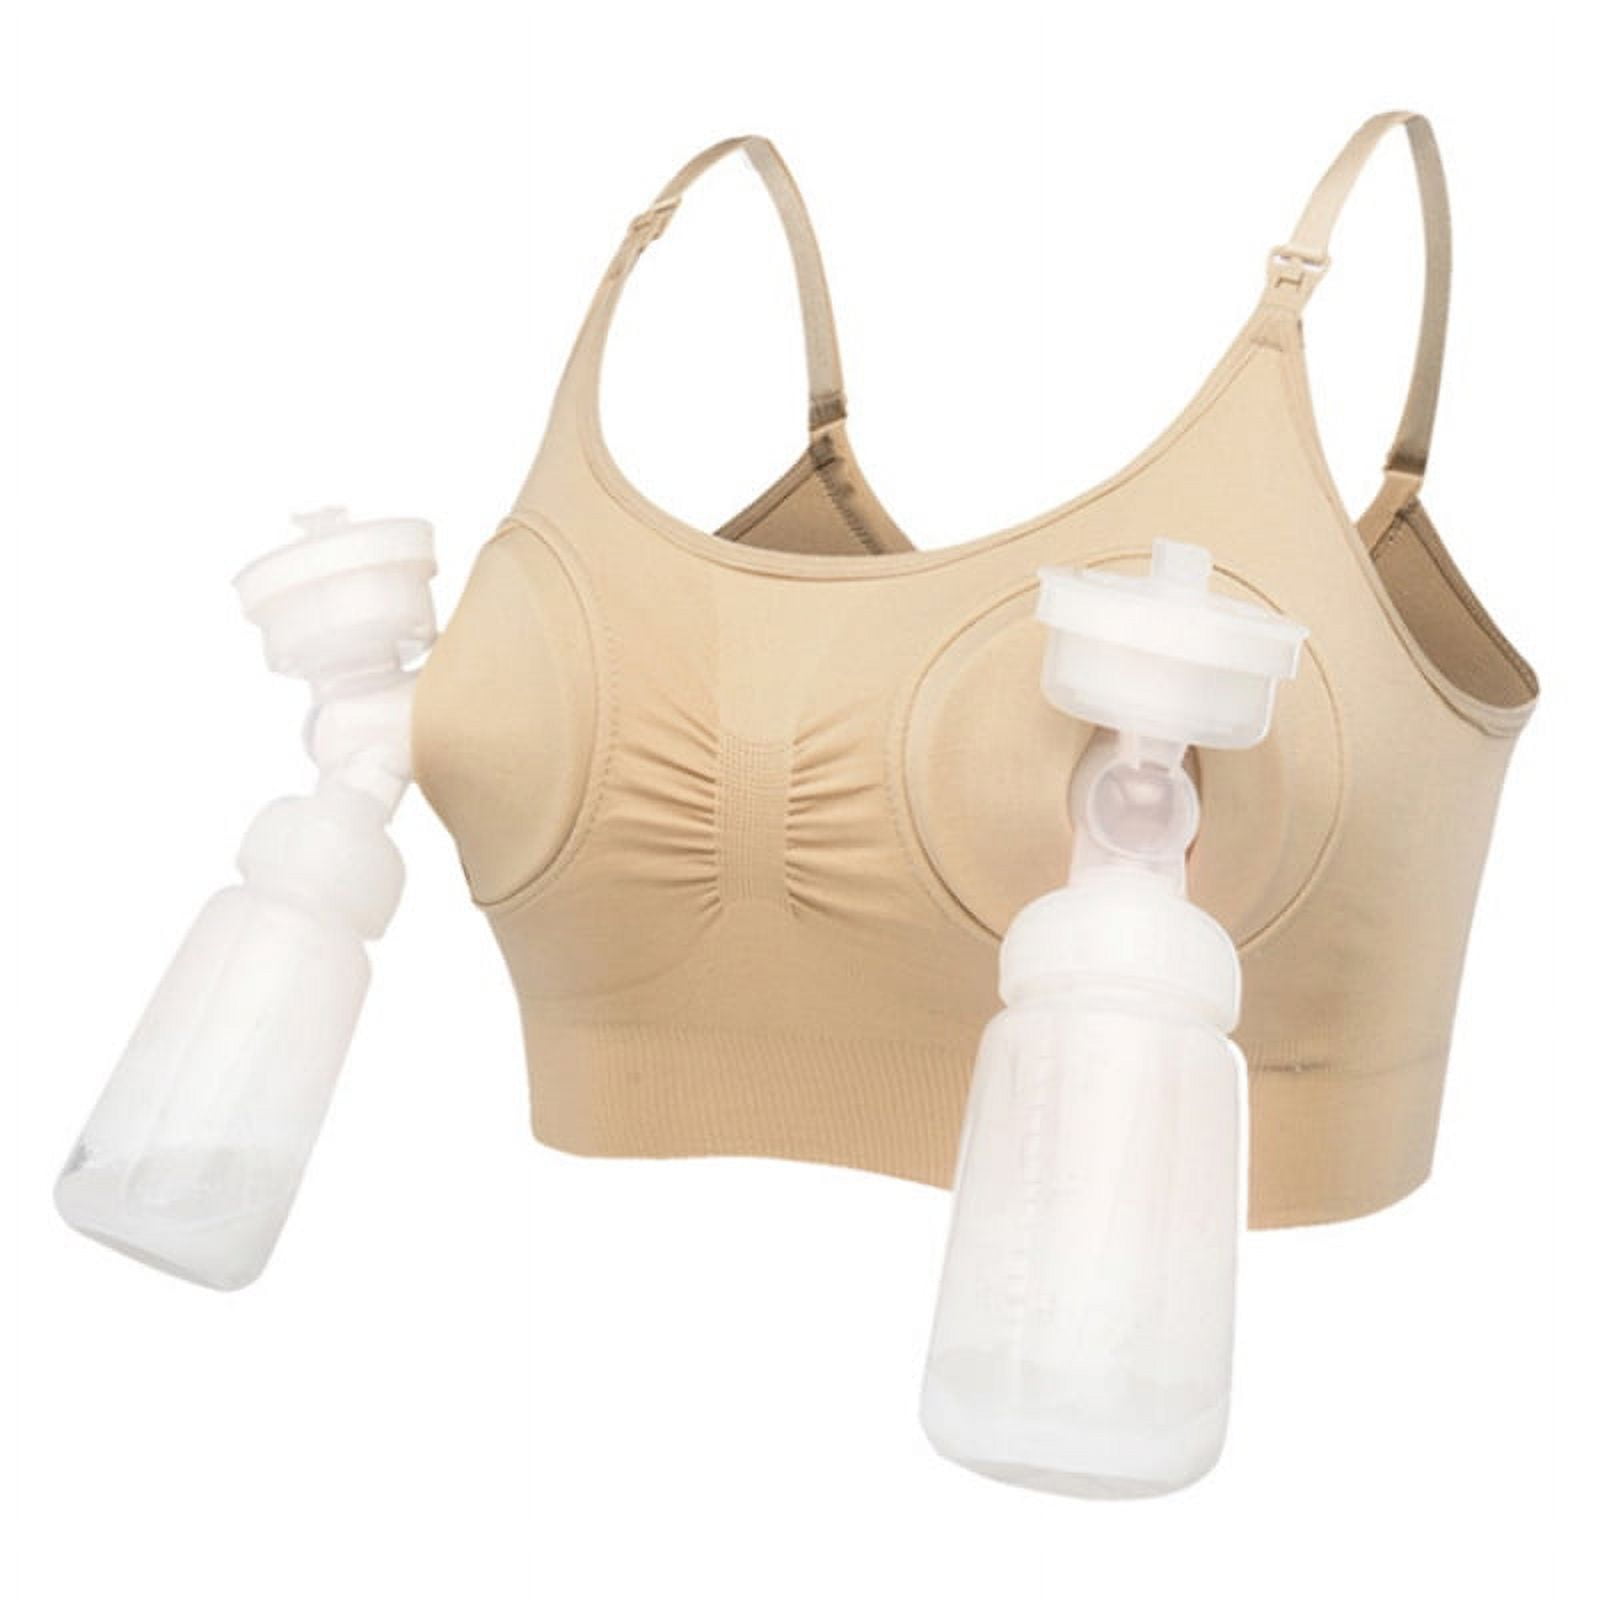 Hands Free Pumping Bra, Momcozy Adjustable Breast-pump Holding And Nursing  Bra